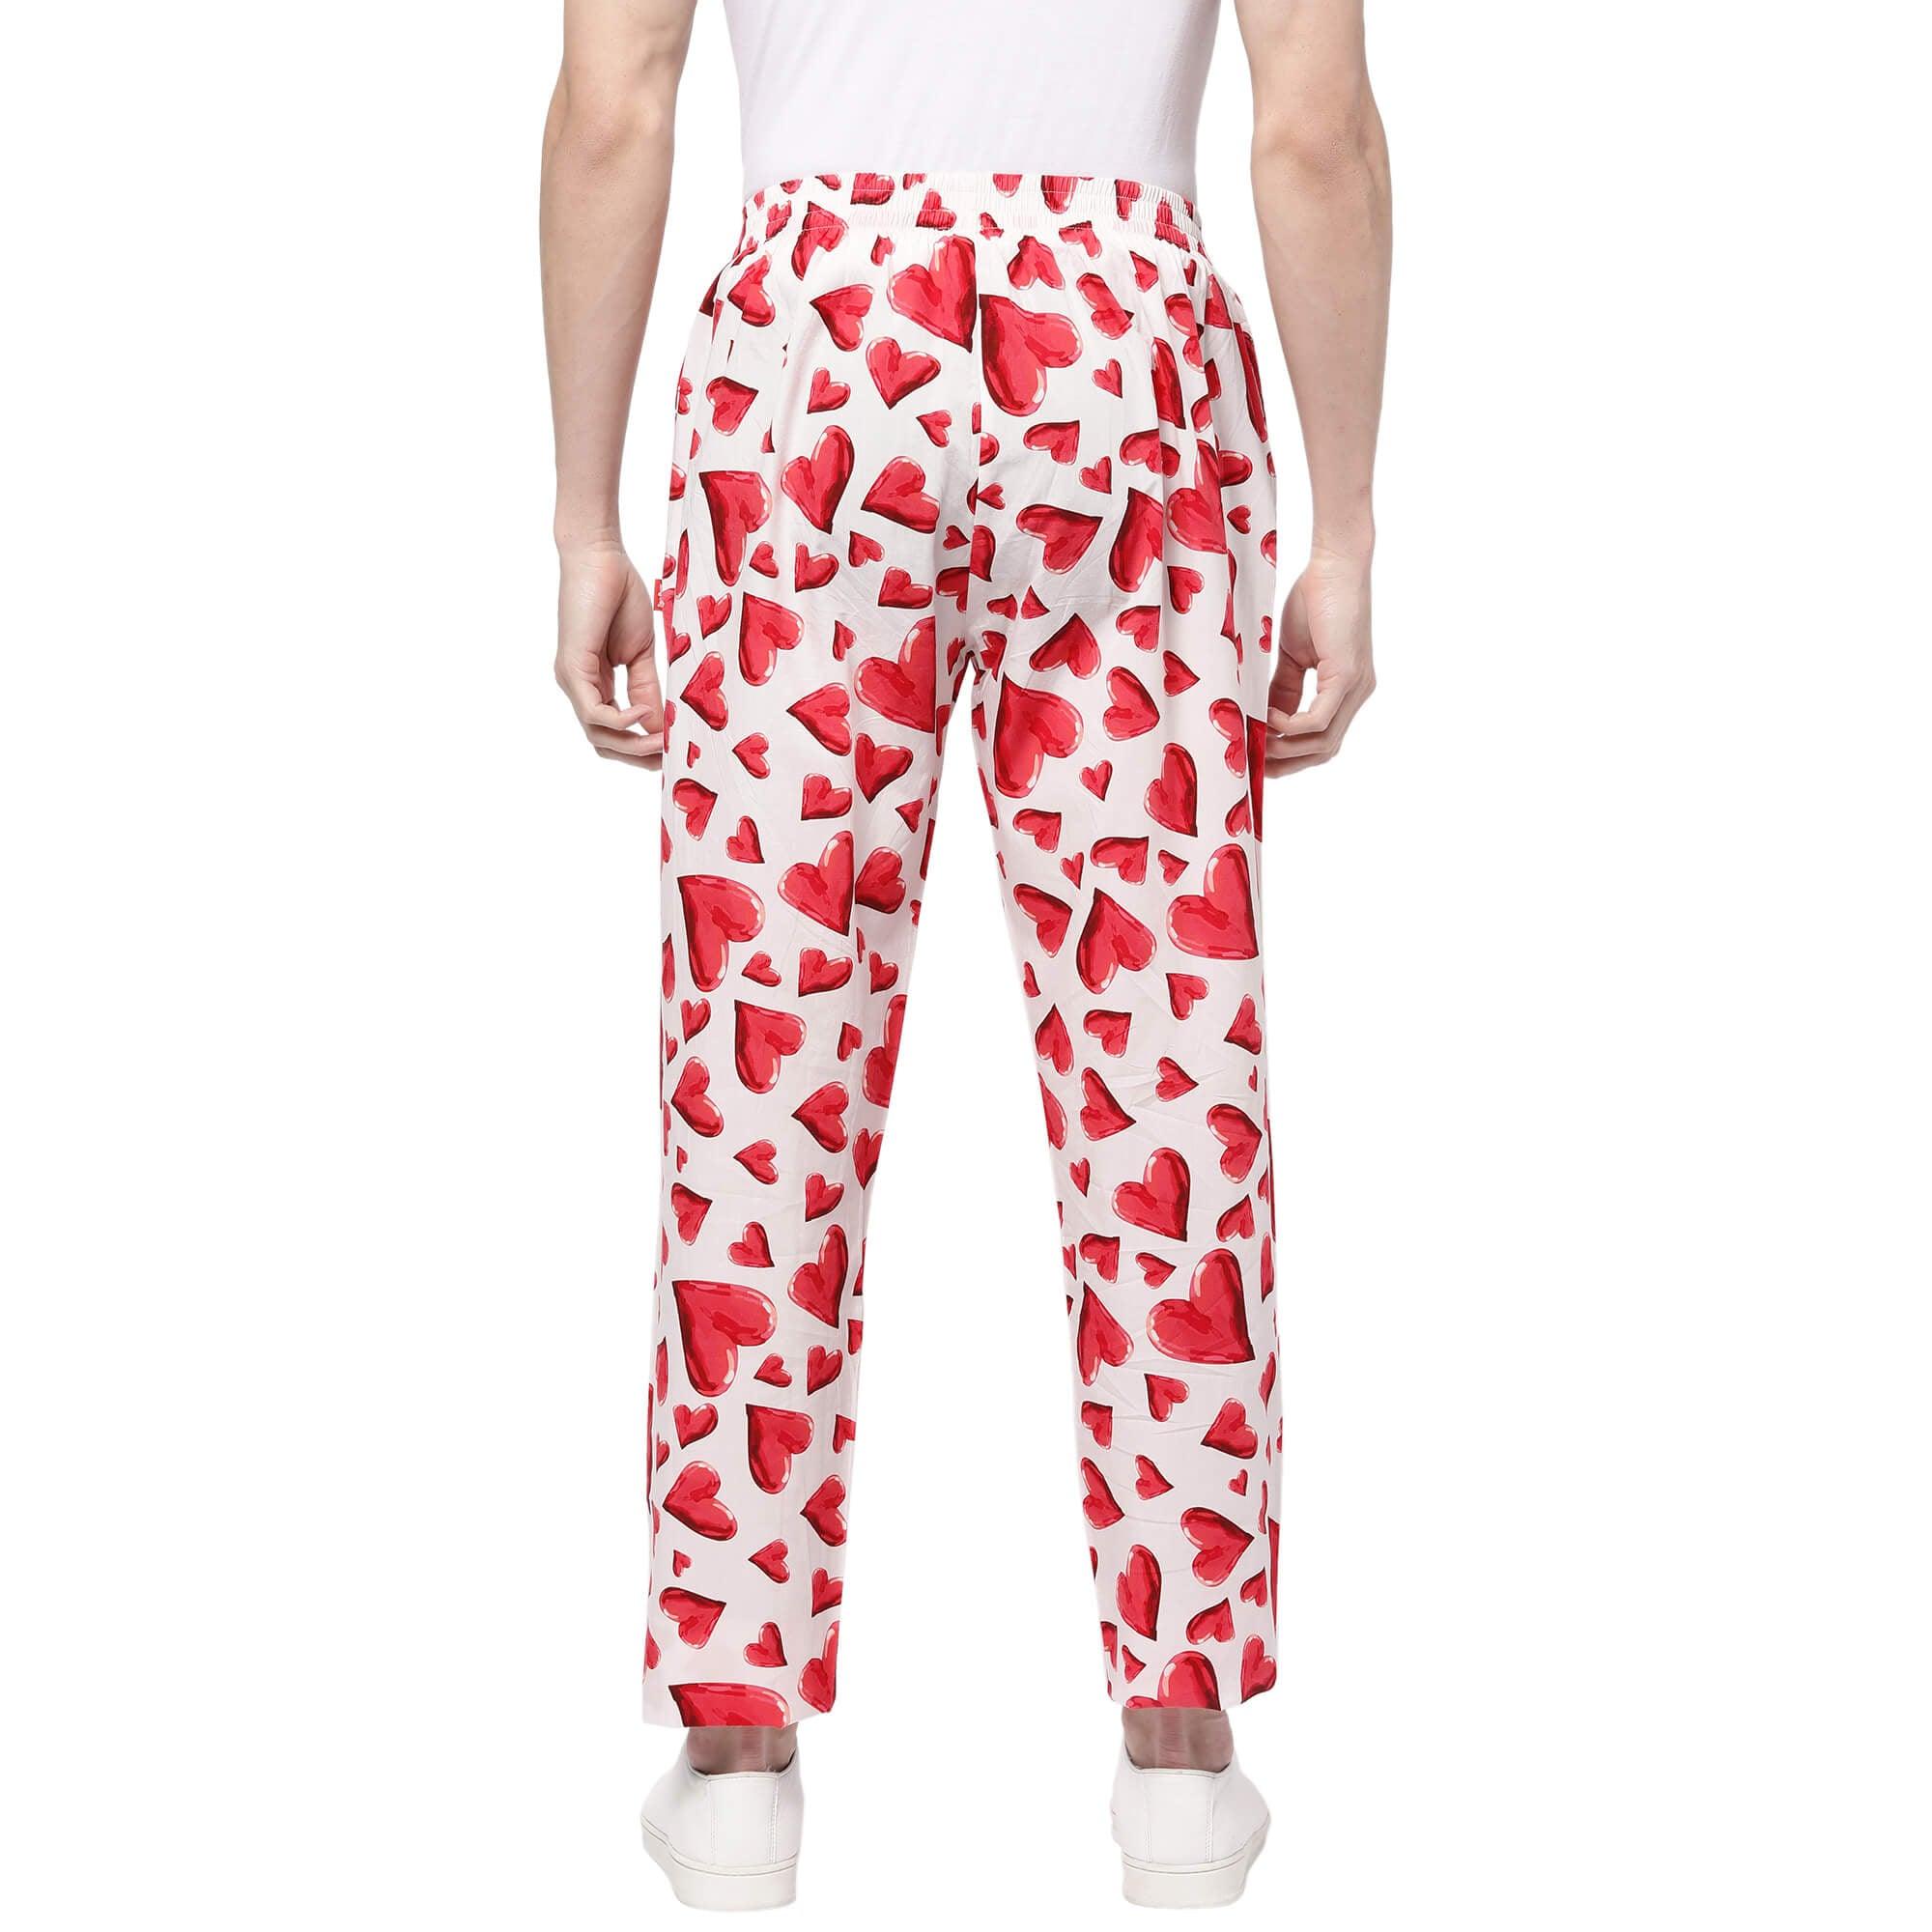 Valentine Hearts Printed Stylish Pajama For Men